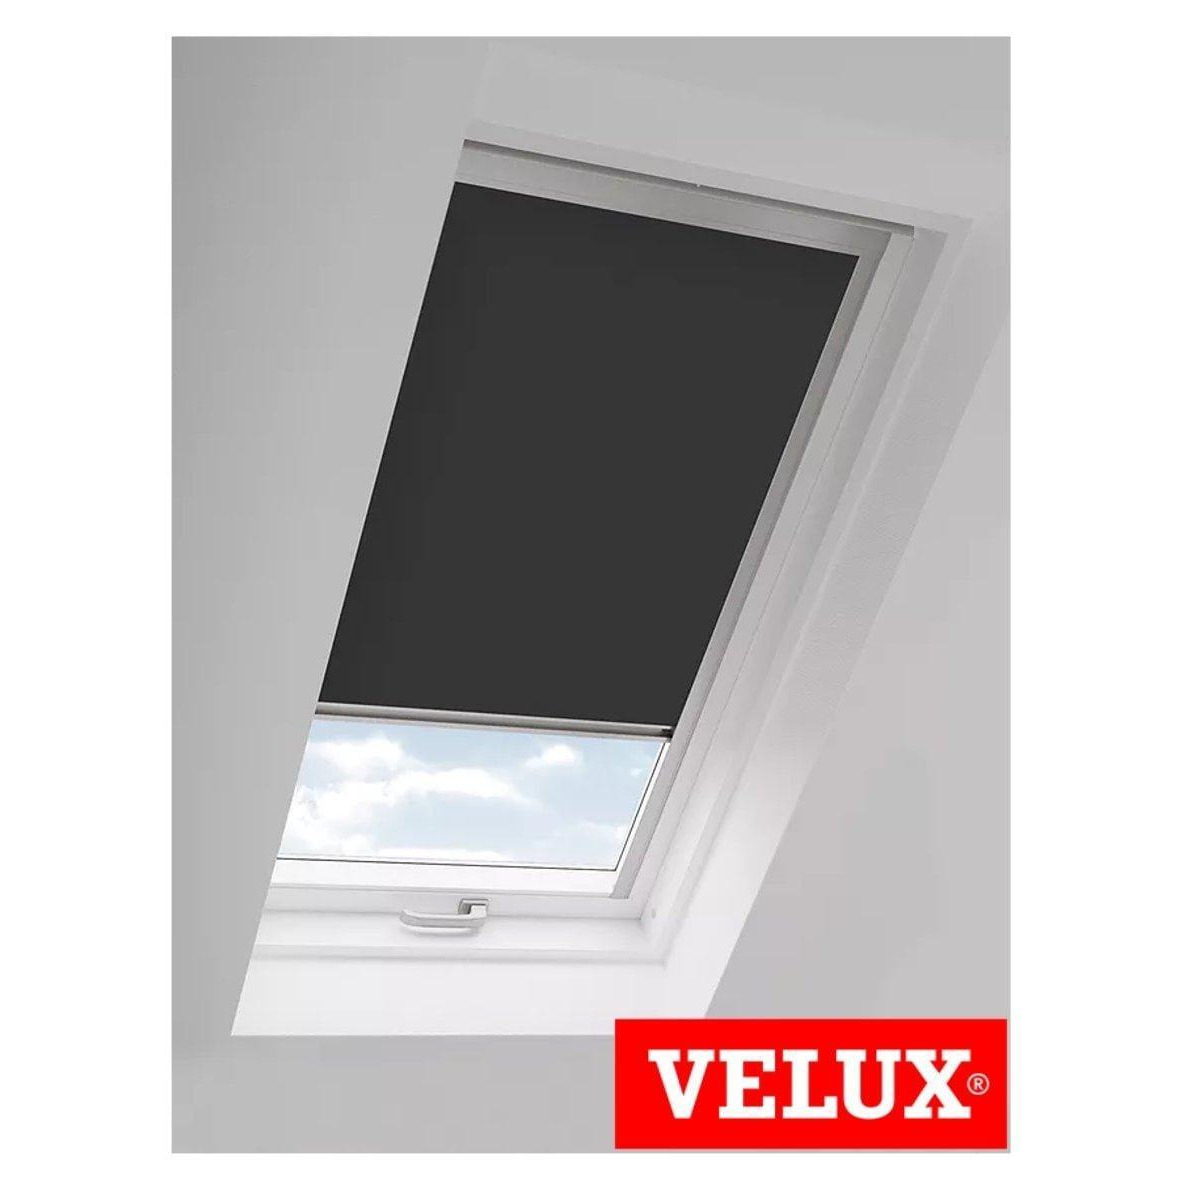 Raven Black Thermal Blackout Skylight Roller Blinds (Velux Roof Windows G Codes) - image 1